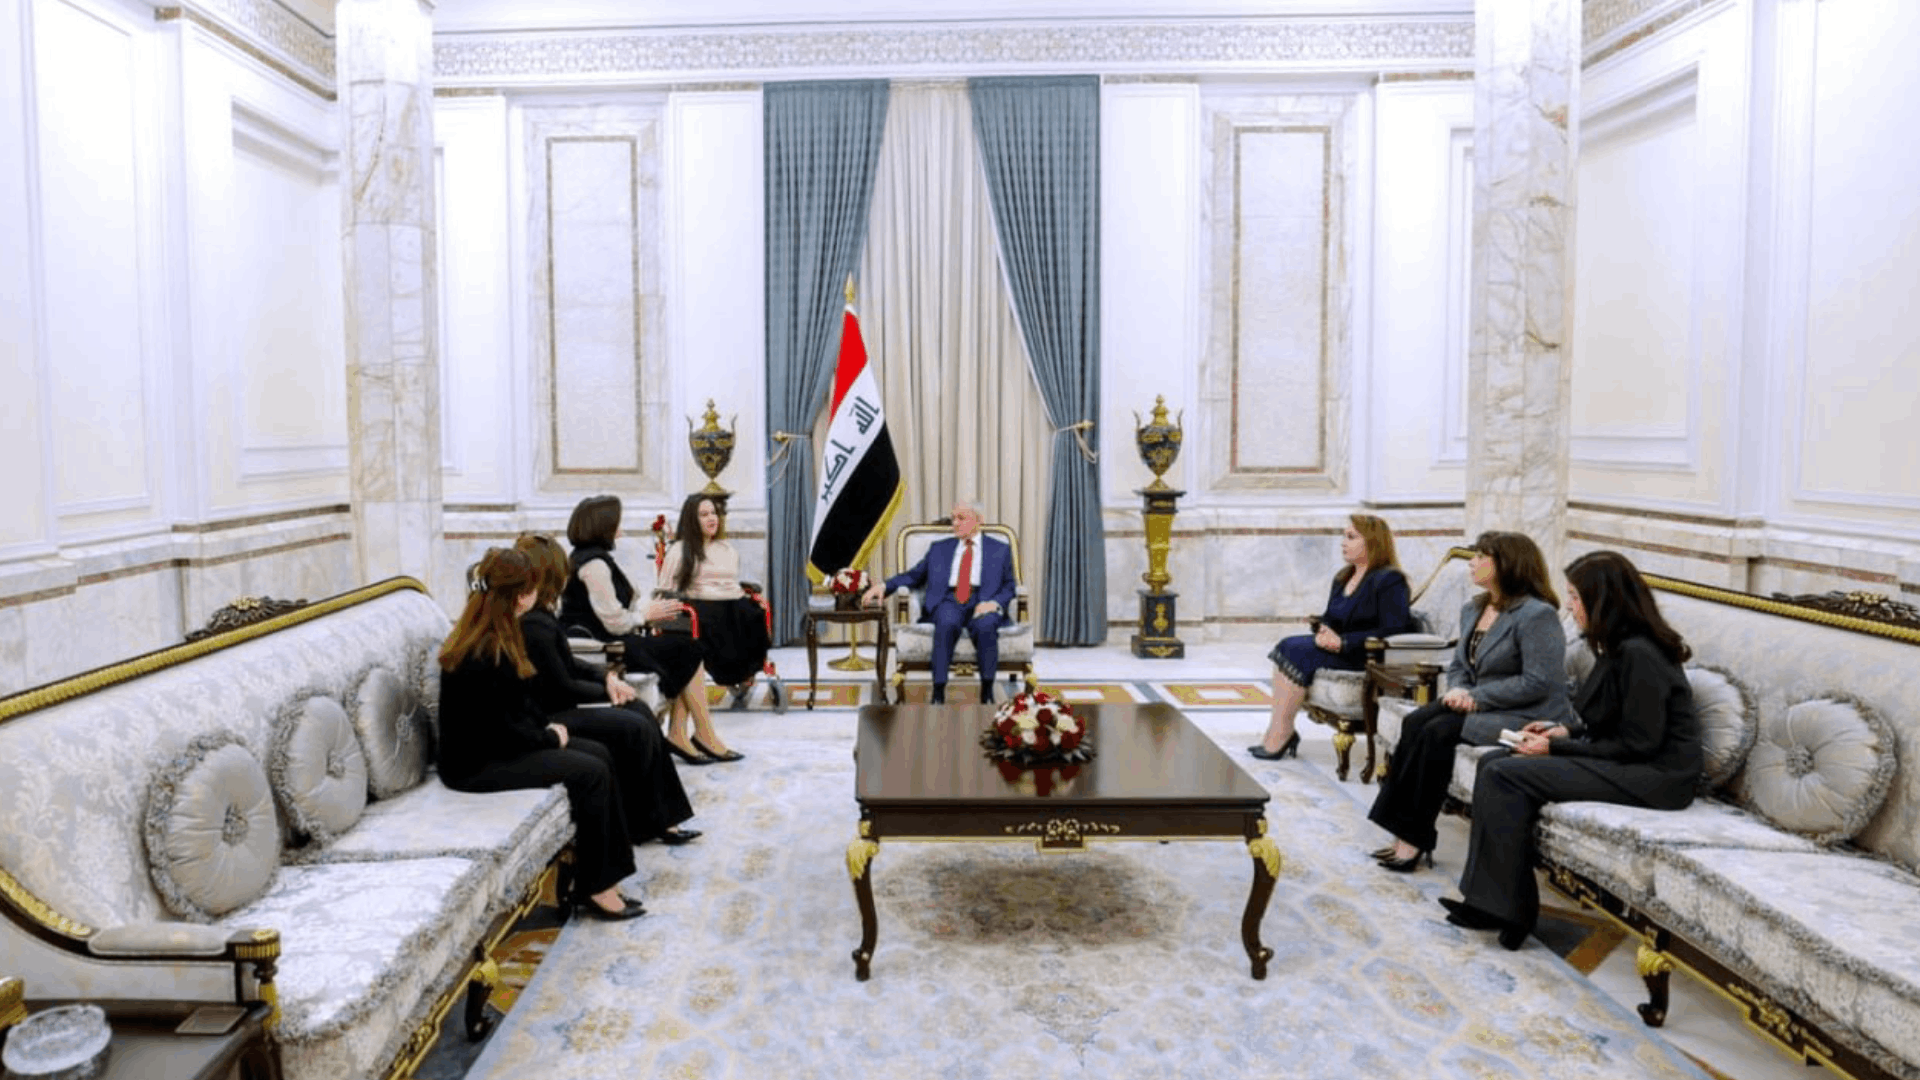  President Rashid meets a number of women